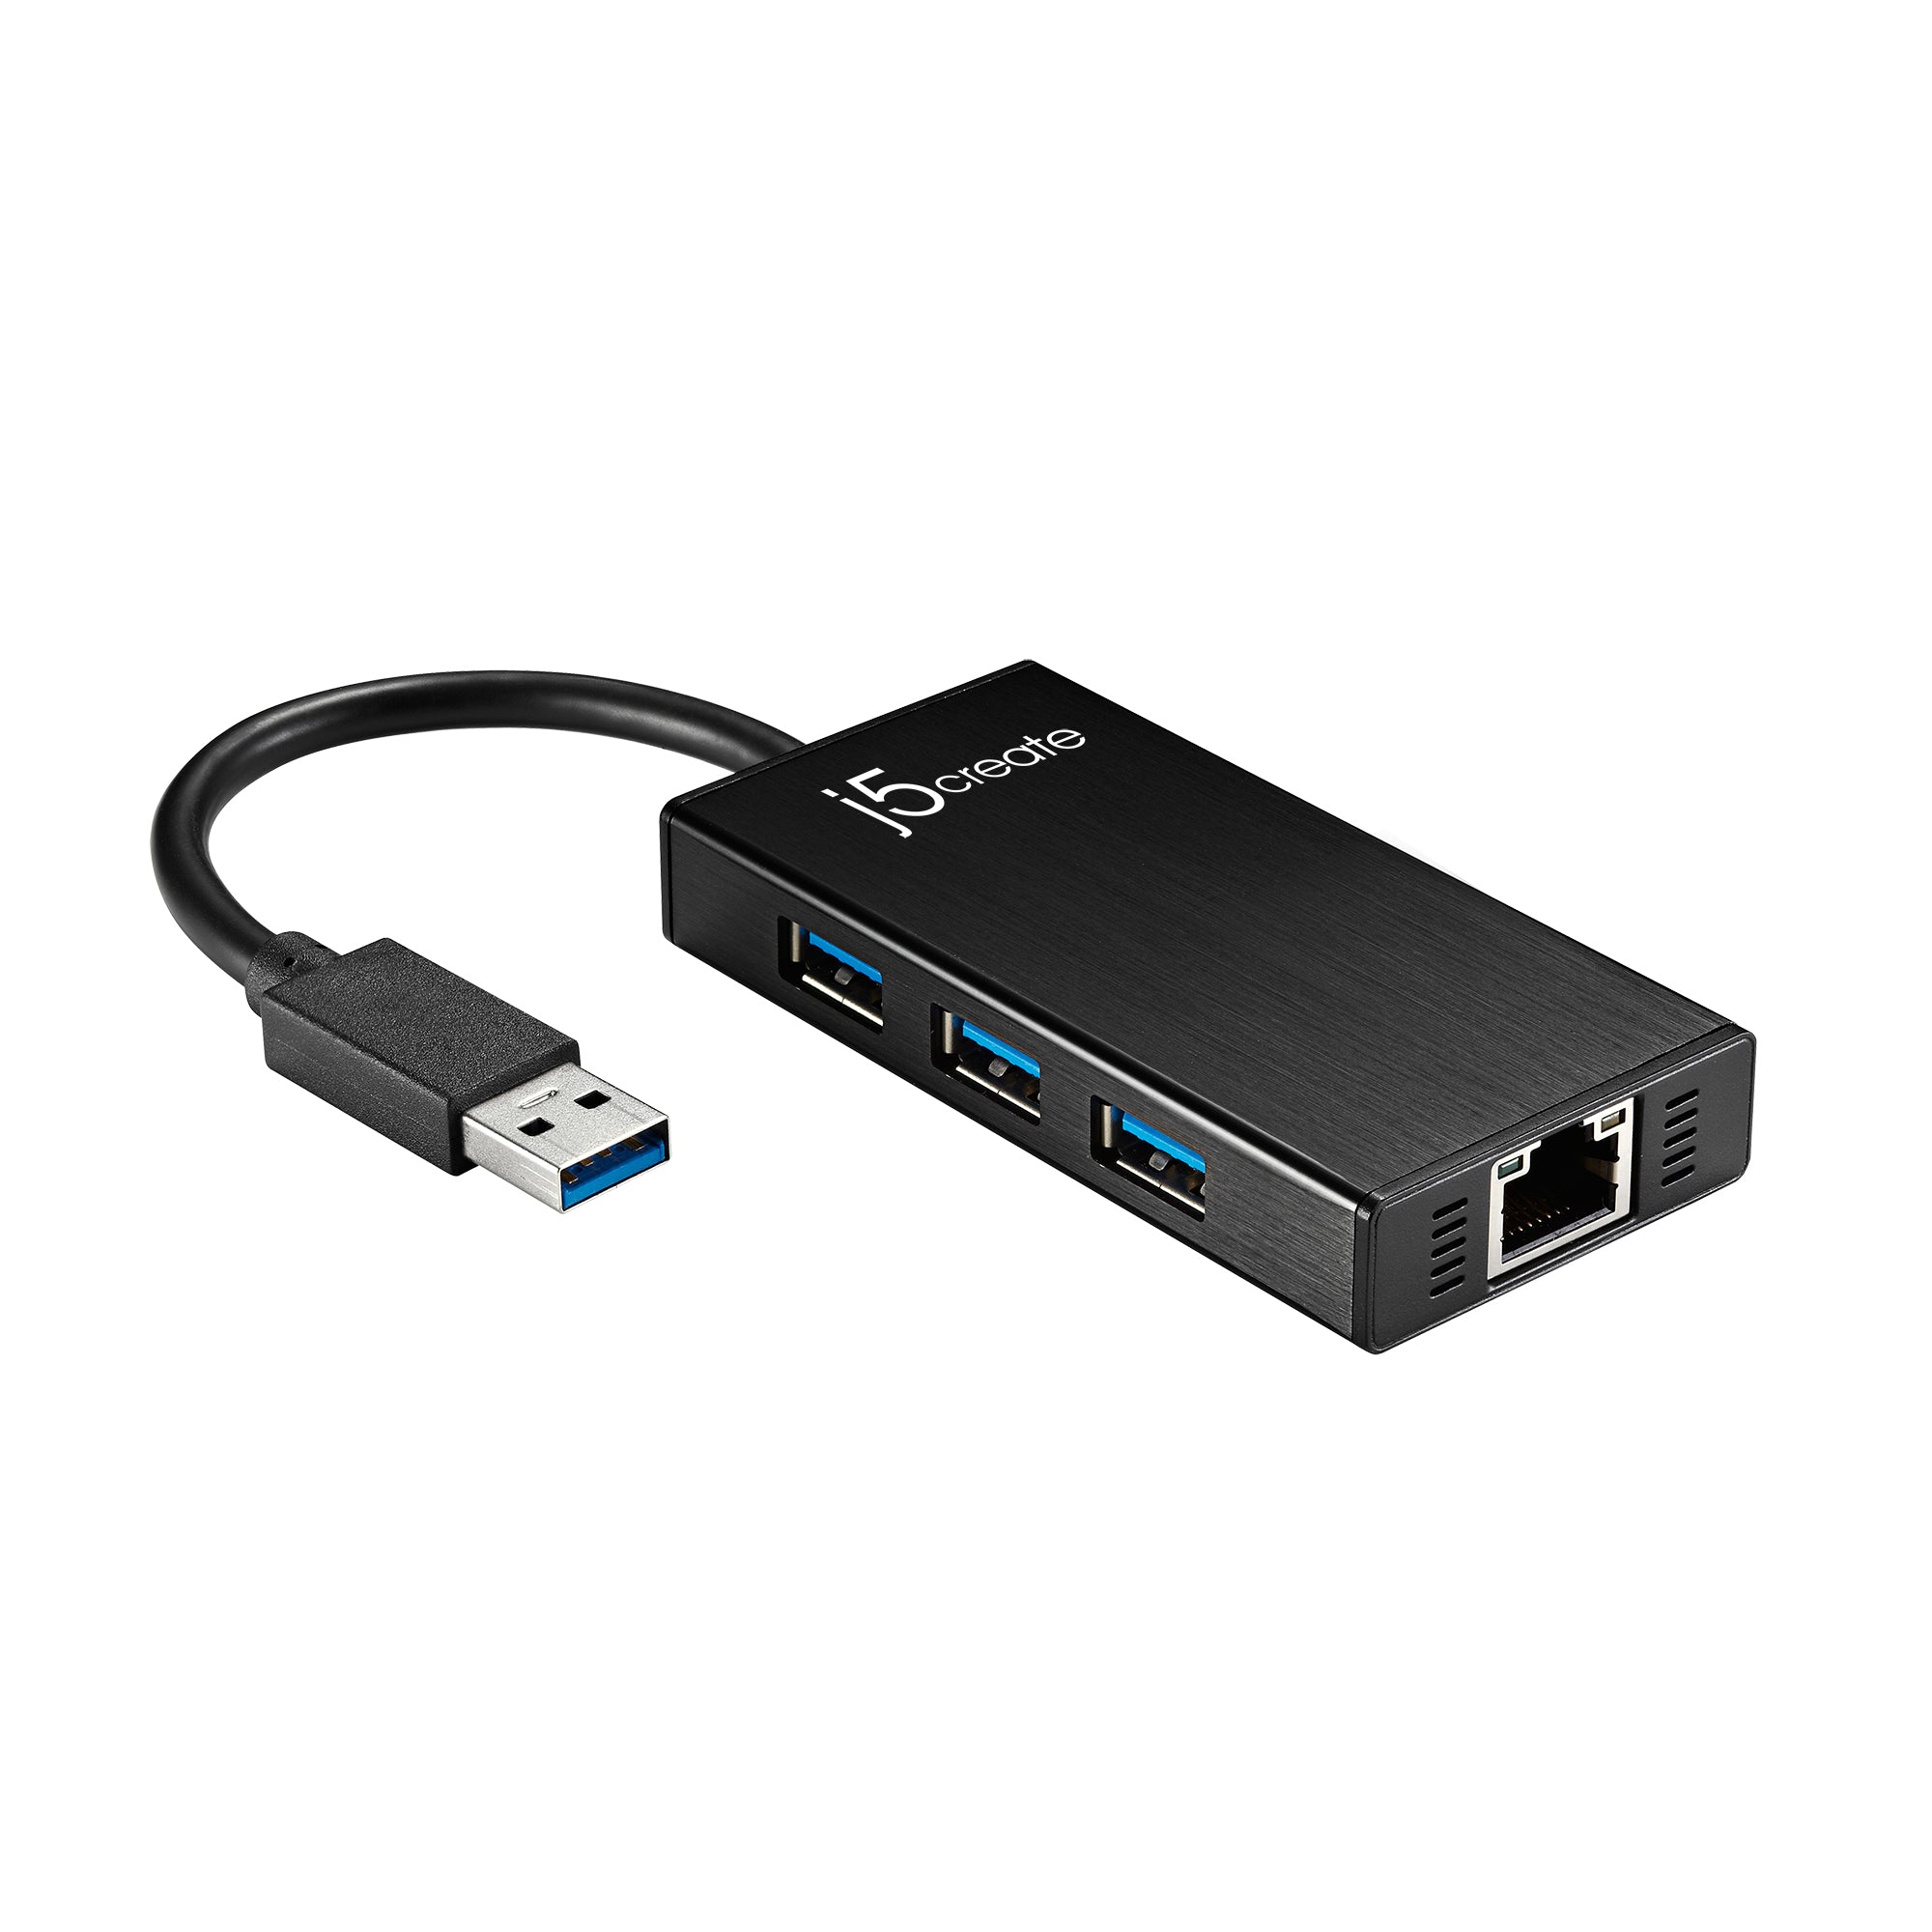 YHL4111003A@10 ports Hi-Speed USB 2.0 moyeu Hub + adaptateur